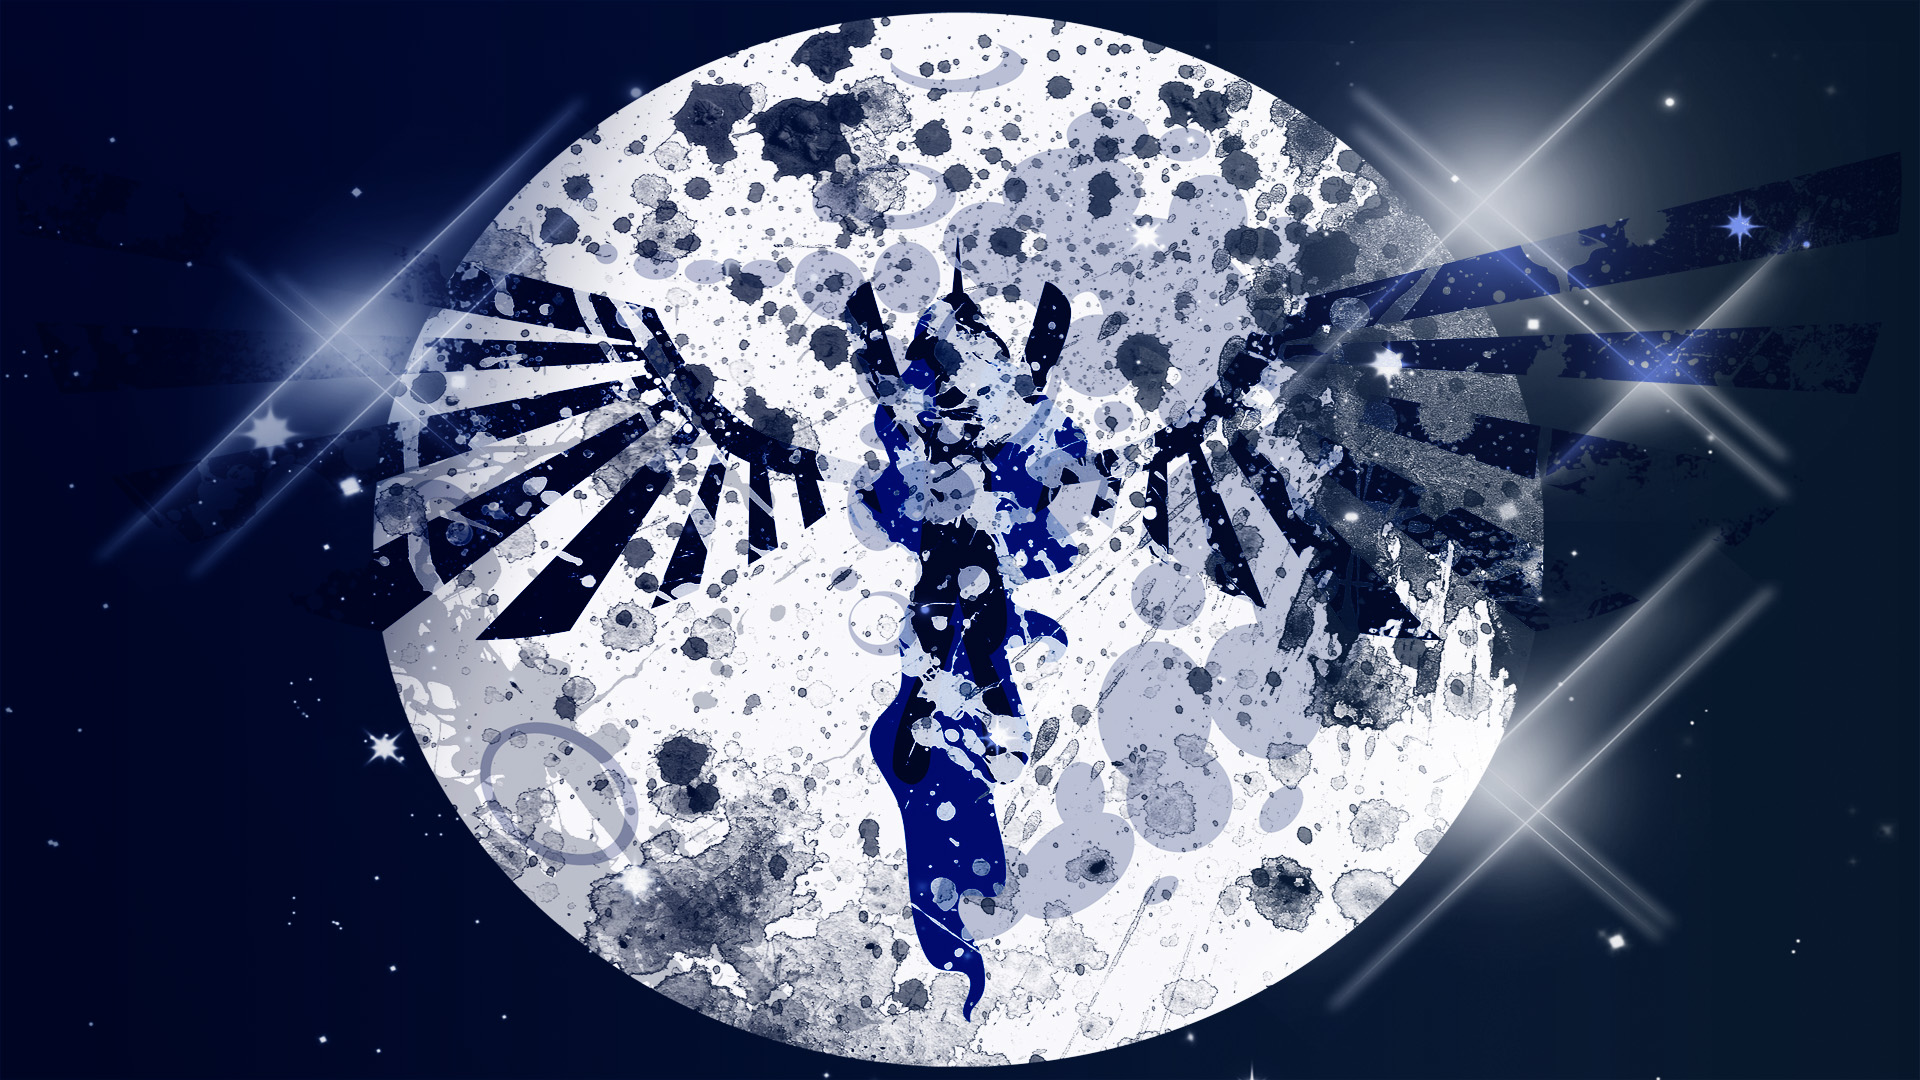 The Power of the Moon by CptOfTheFriendship, MrDaviez, nicolasdominique and SUBJECT-241